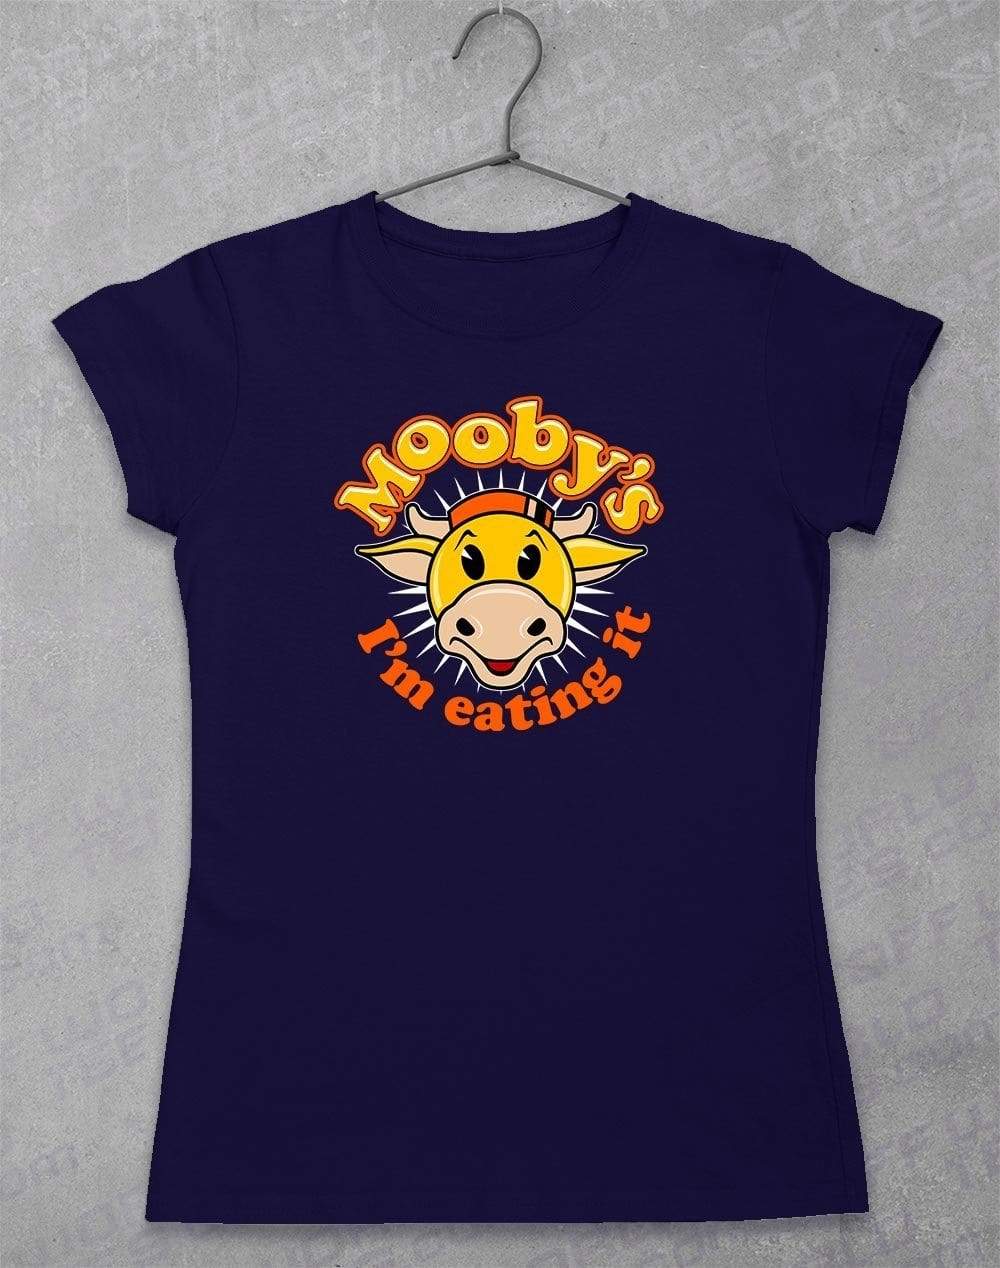 Moobys Women's T-Shirt 8-10 / Navy  - Off World Tees